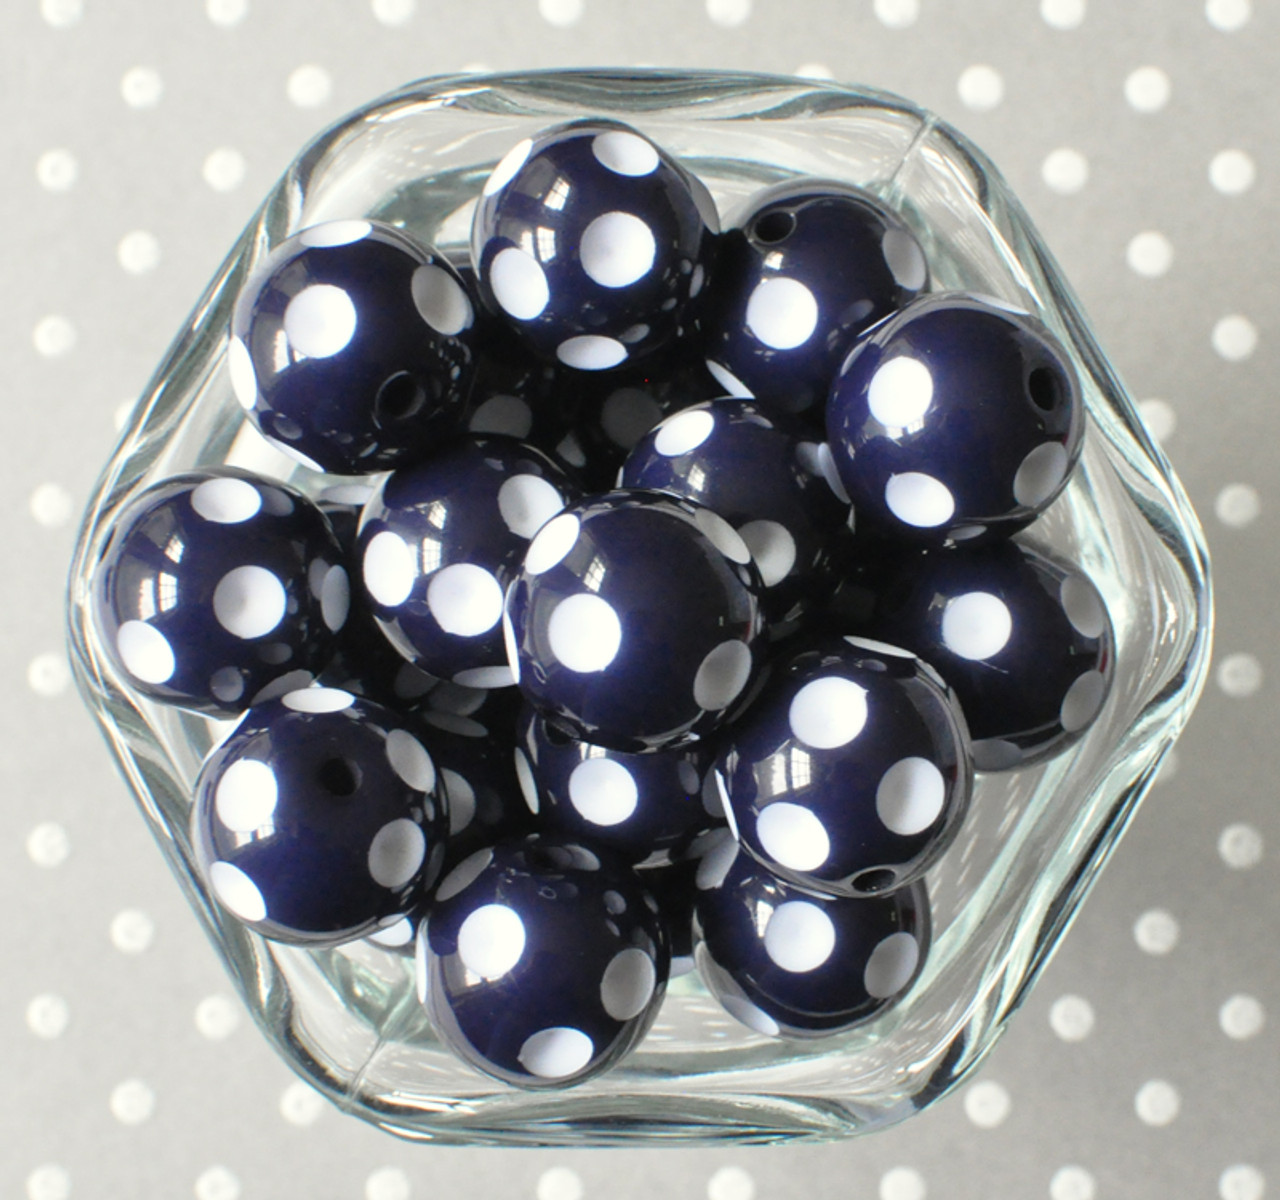 20mm Black with White Polka Dots Bubblegum Beads